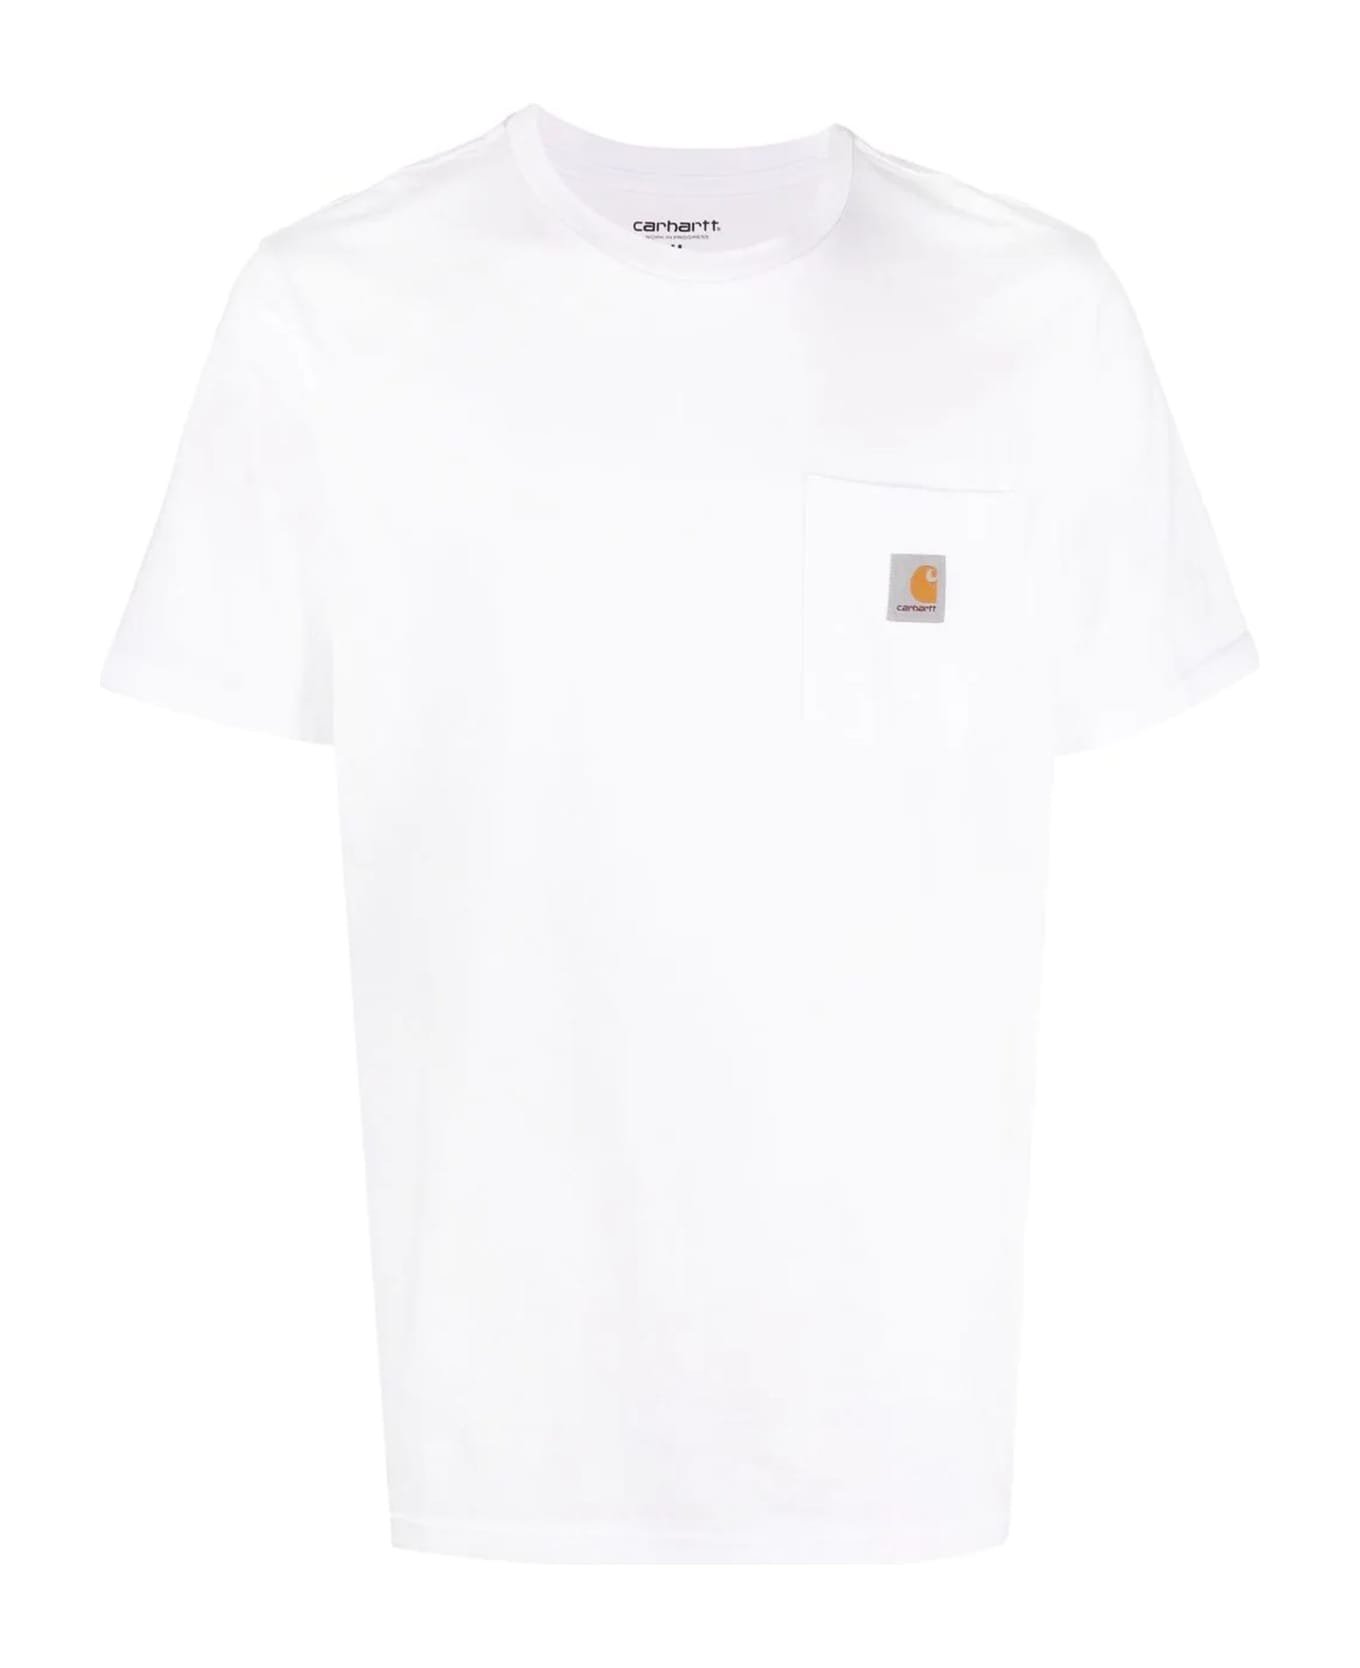 Carhartt White Cotton T-shirt - White